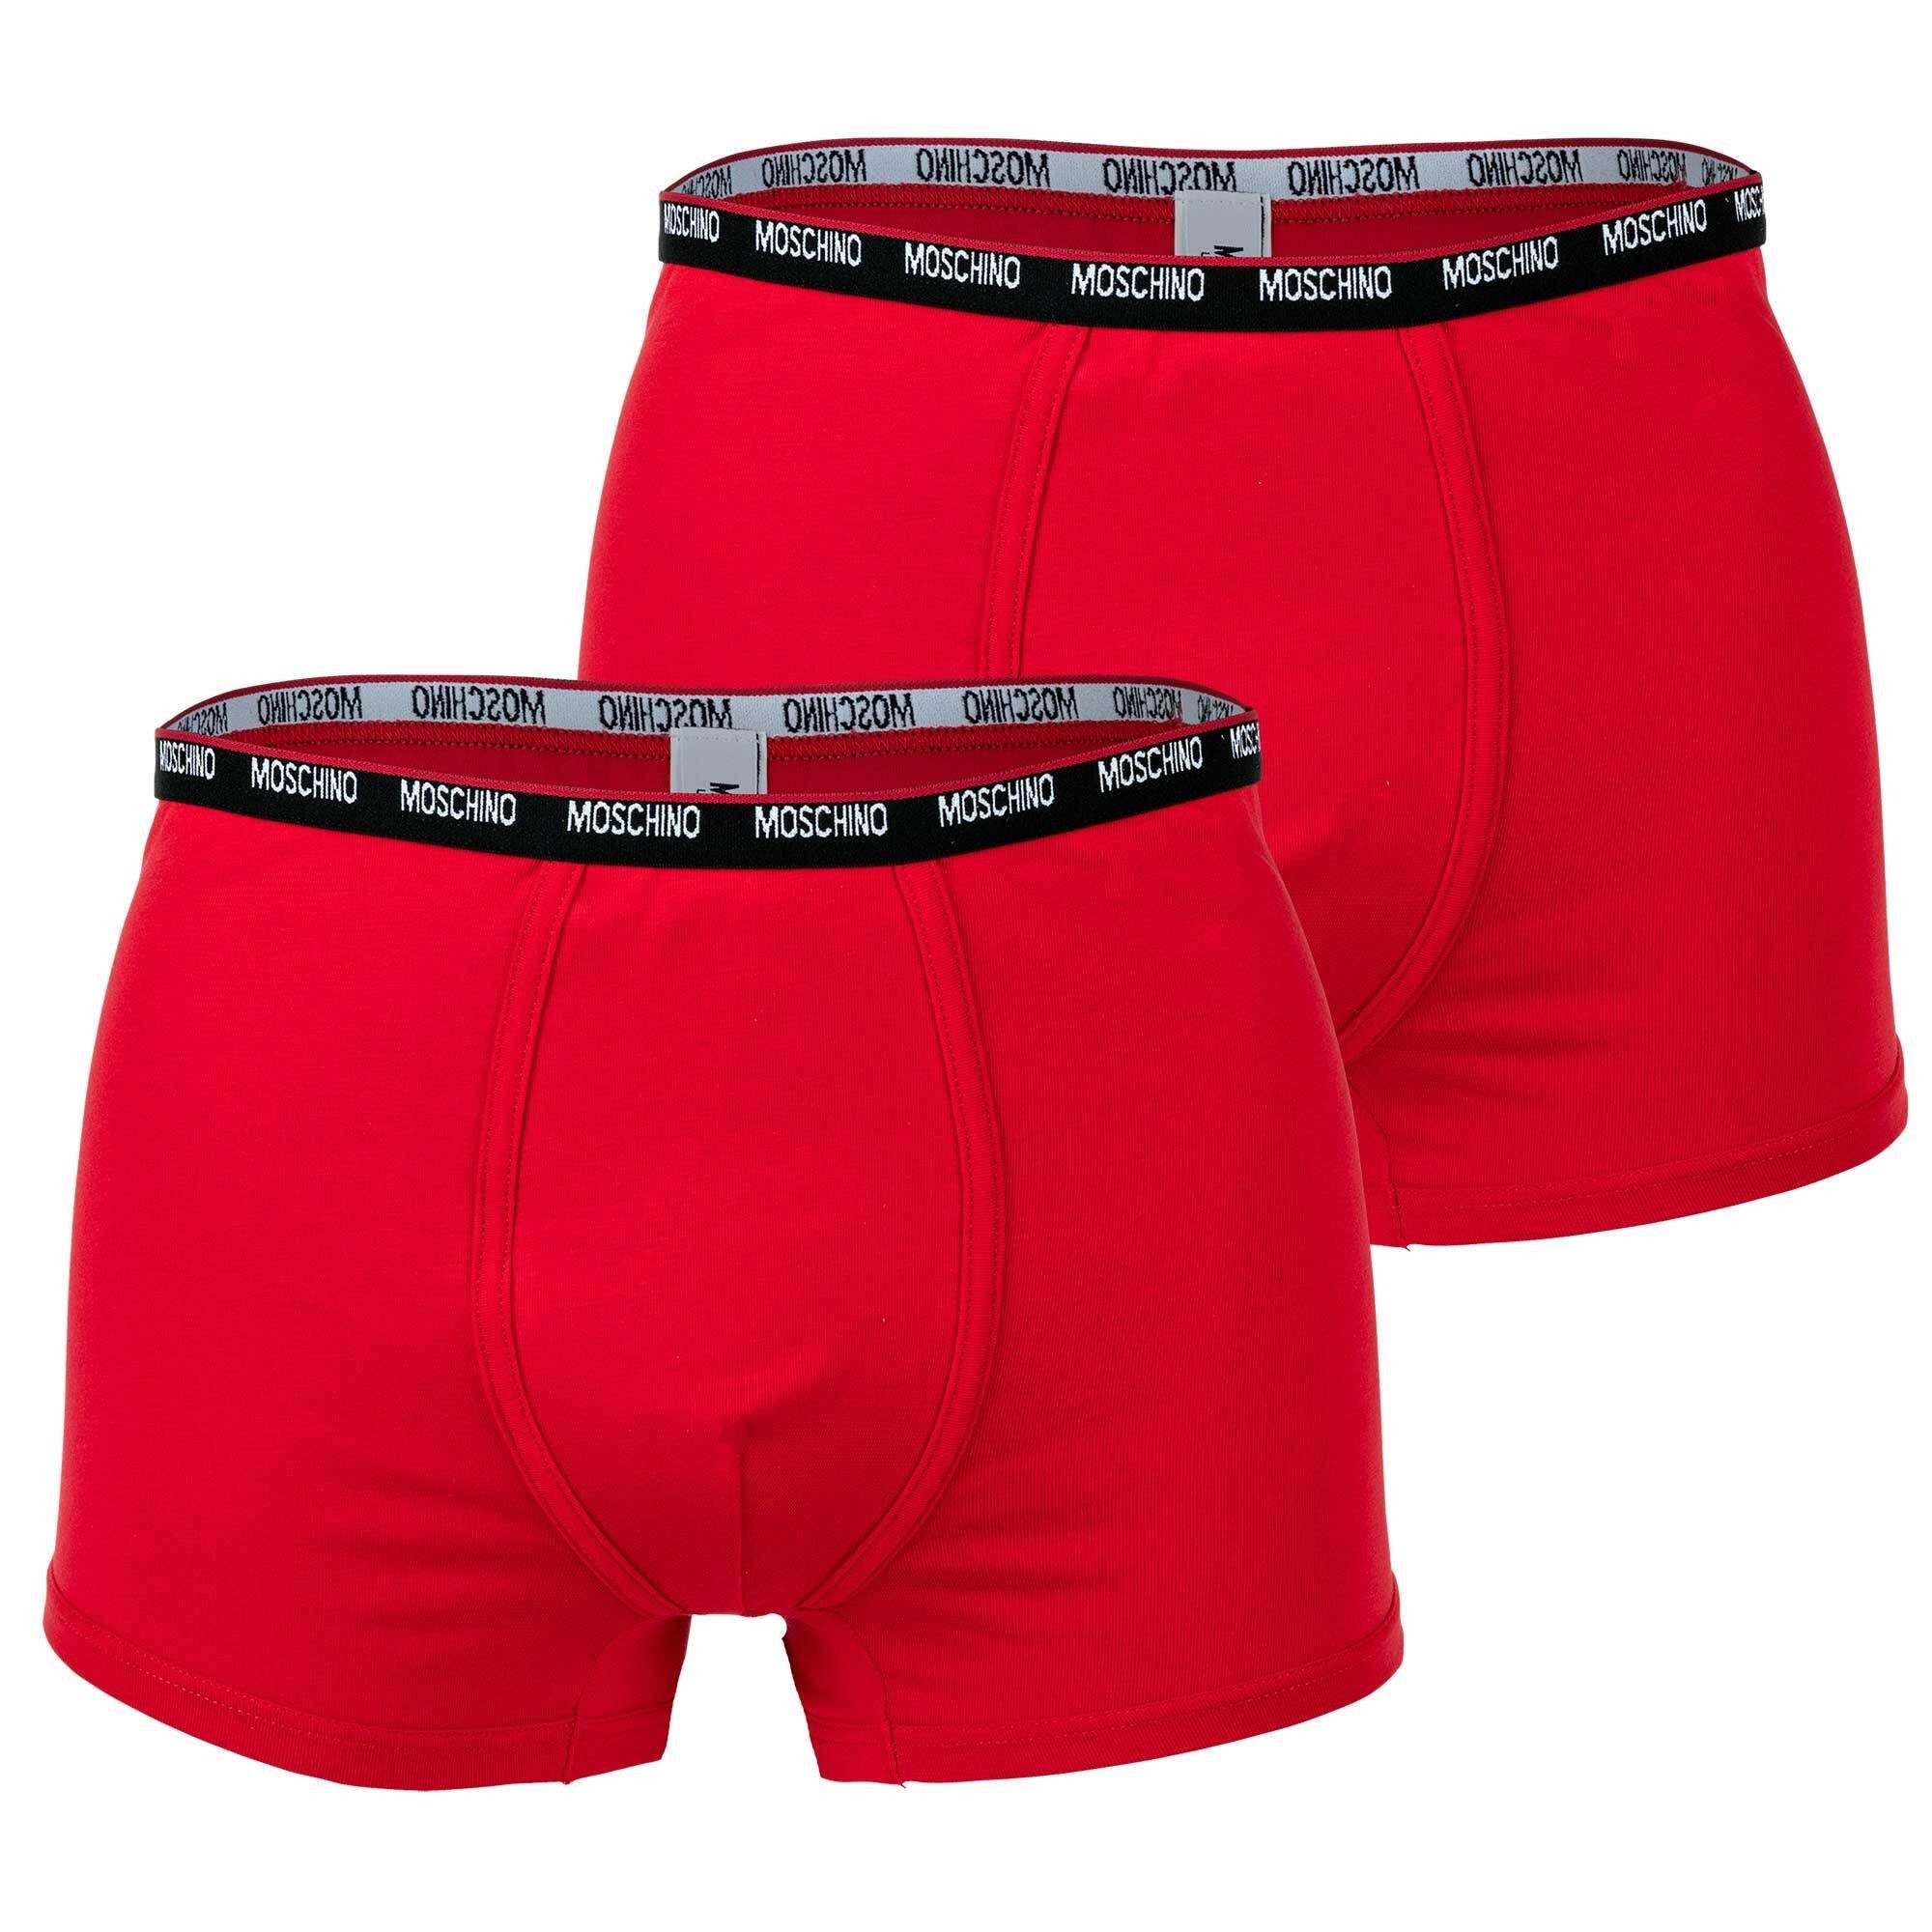 Moschino Boxer Herren Shorts 2er Pack - Trunks, Unterhose, Cotton Rot | Boxershorts